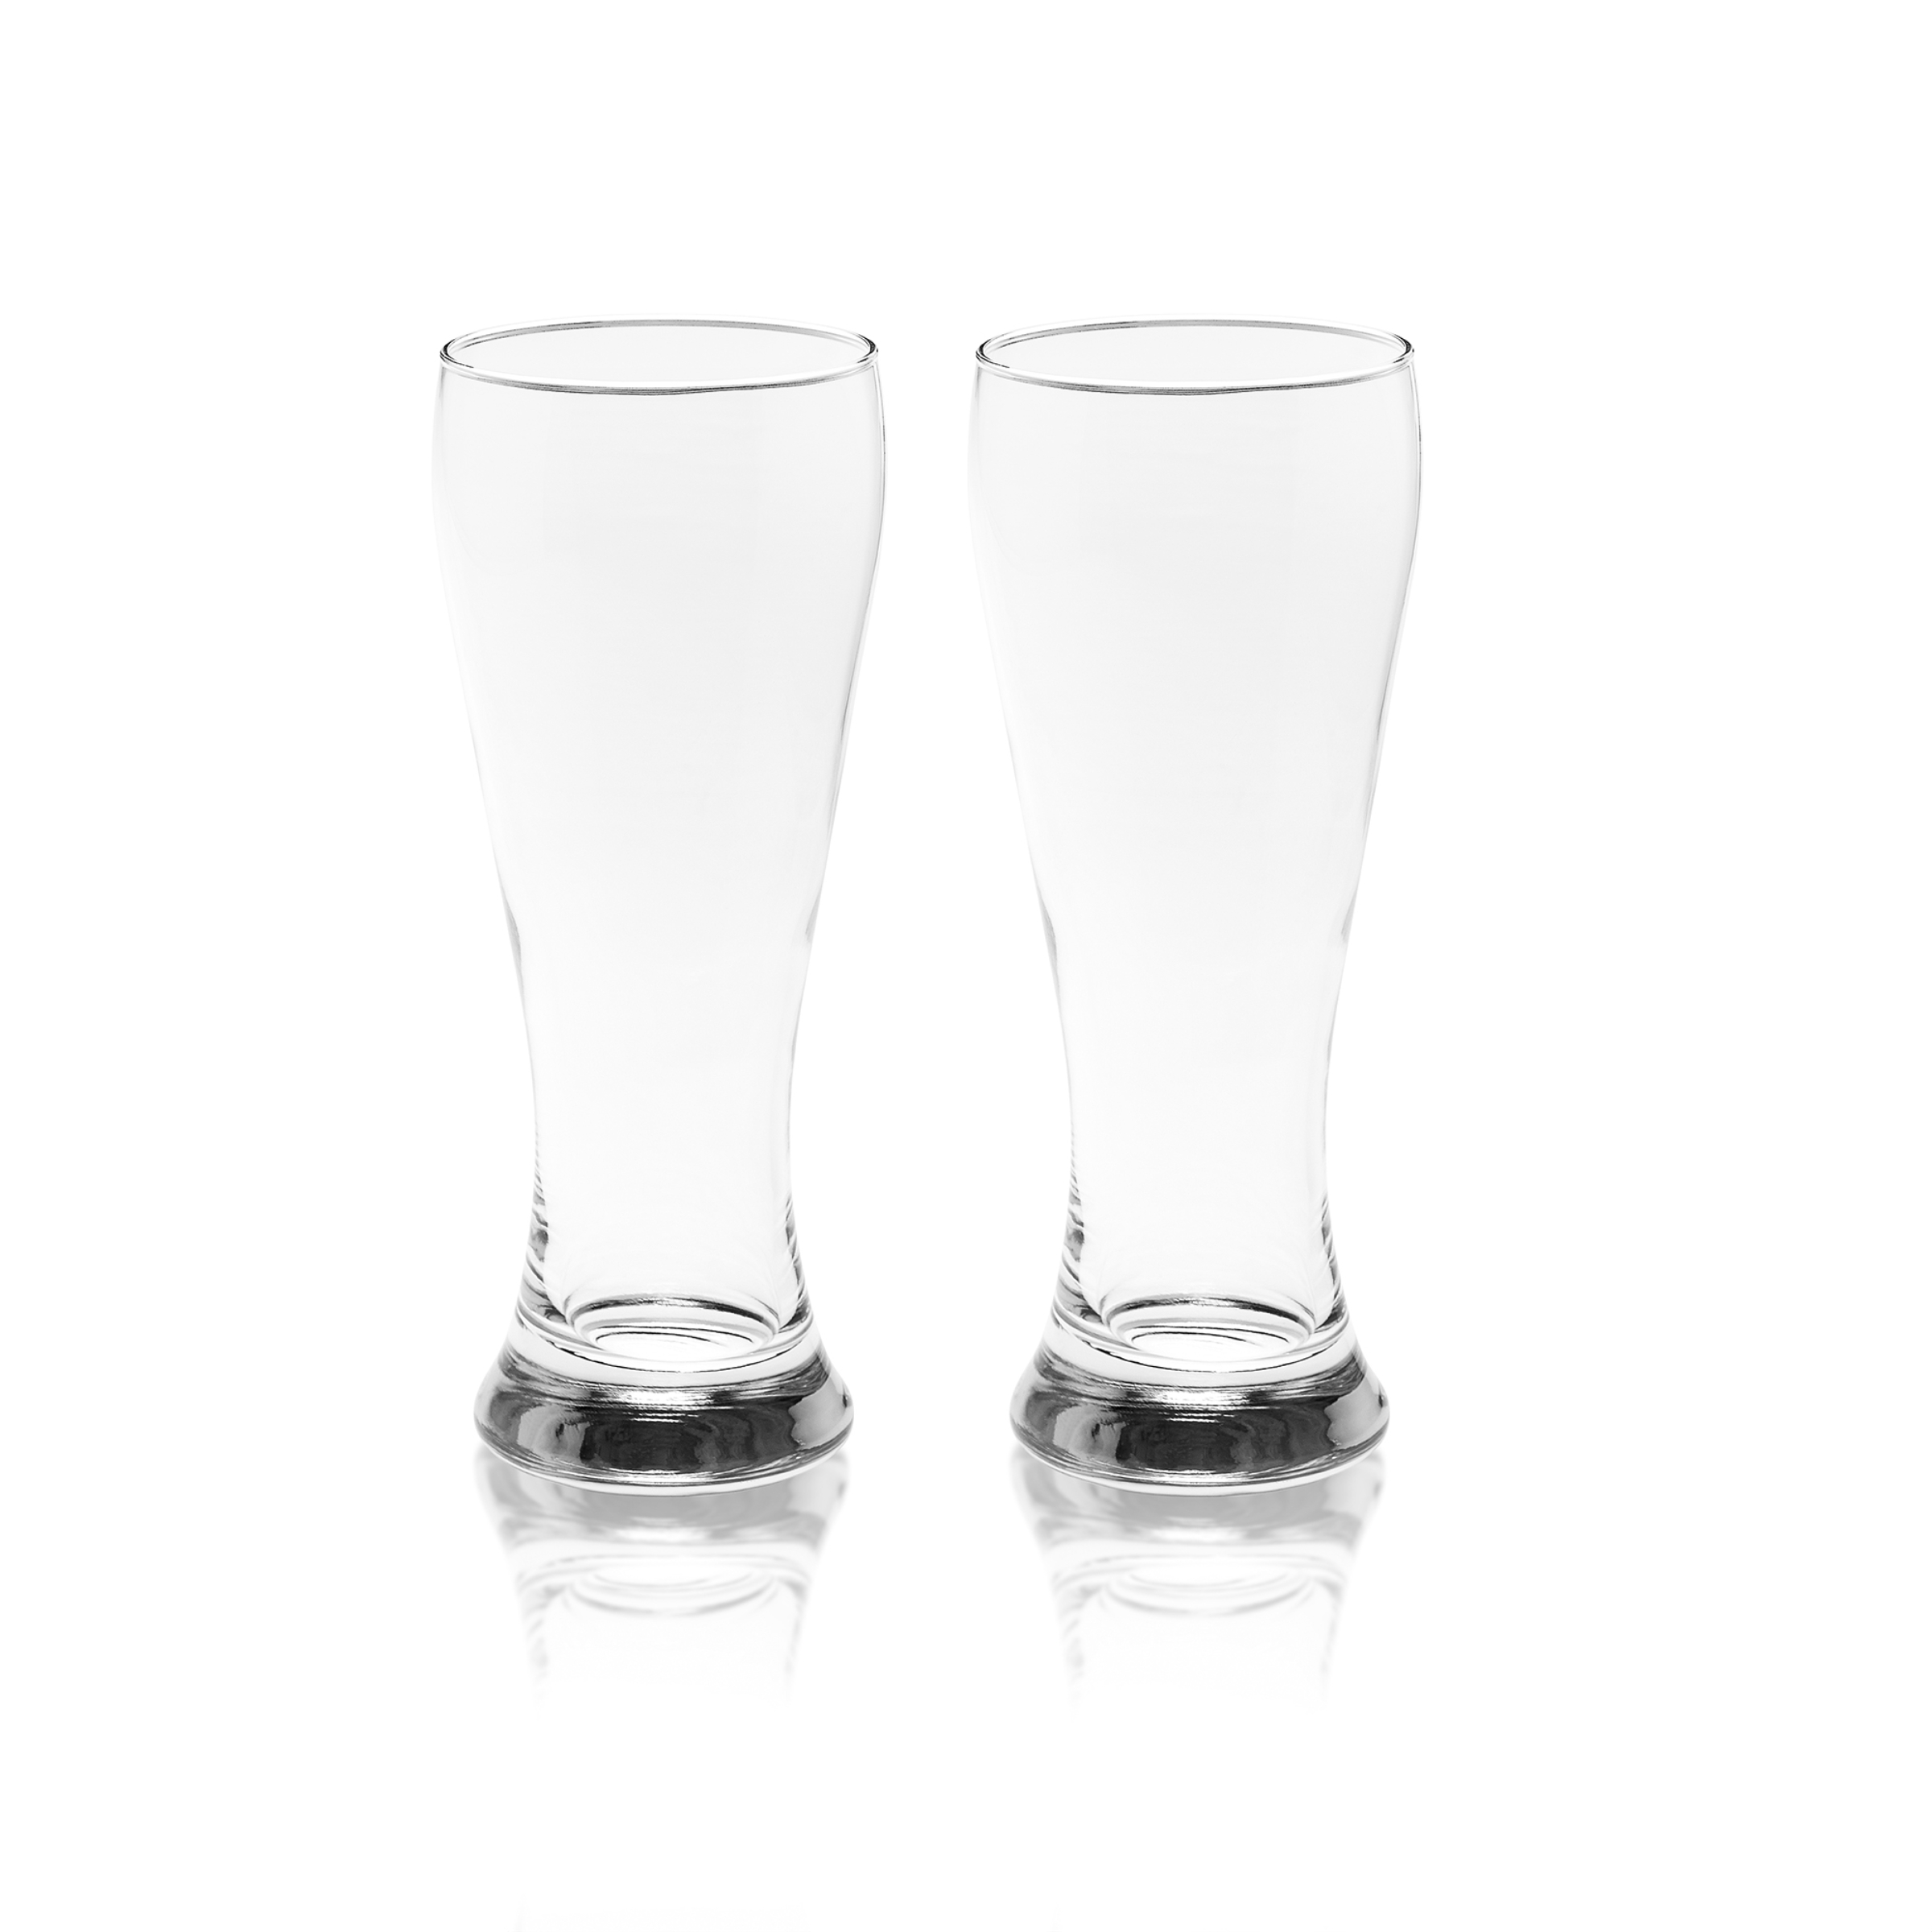 Gourmet Basics By Mikasa Danube S/2 Beer Glasses - 20oz each